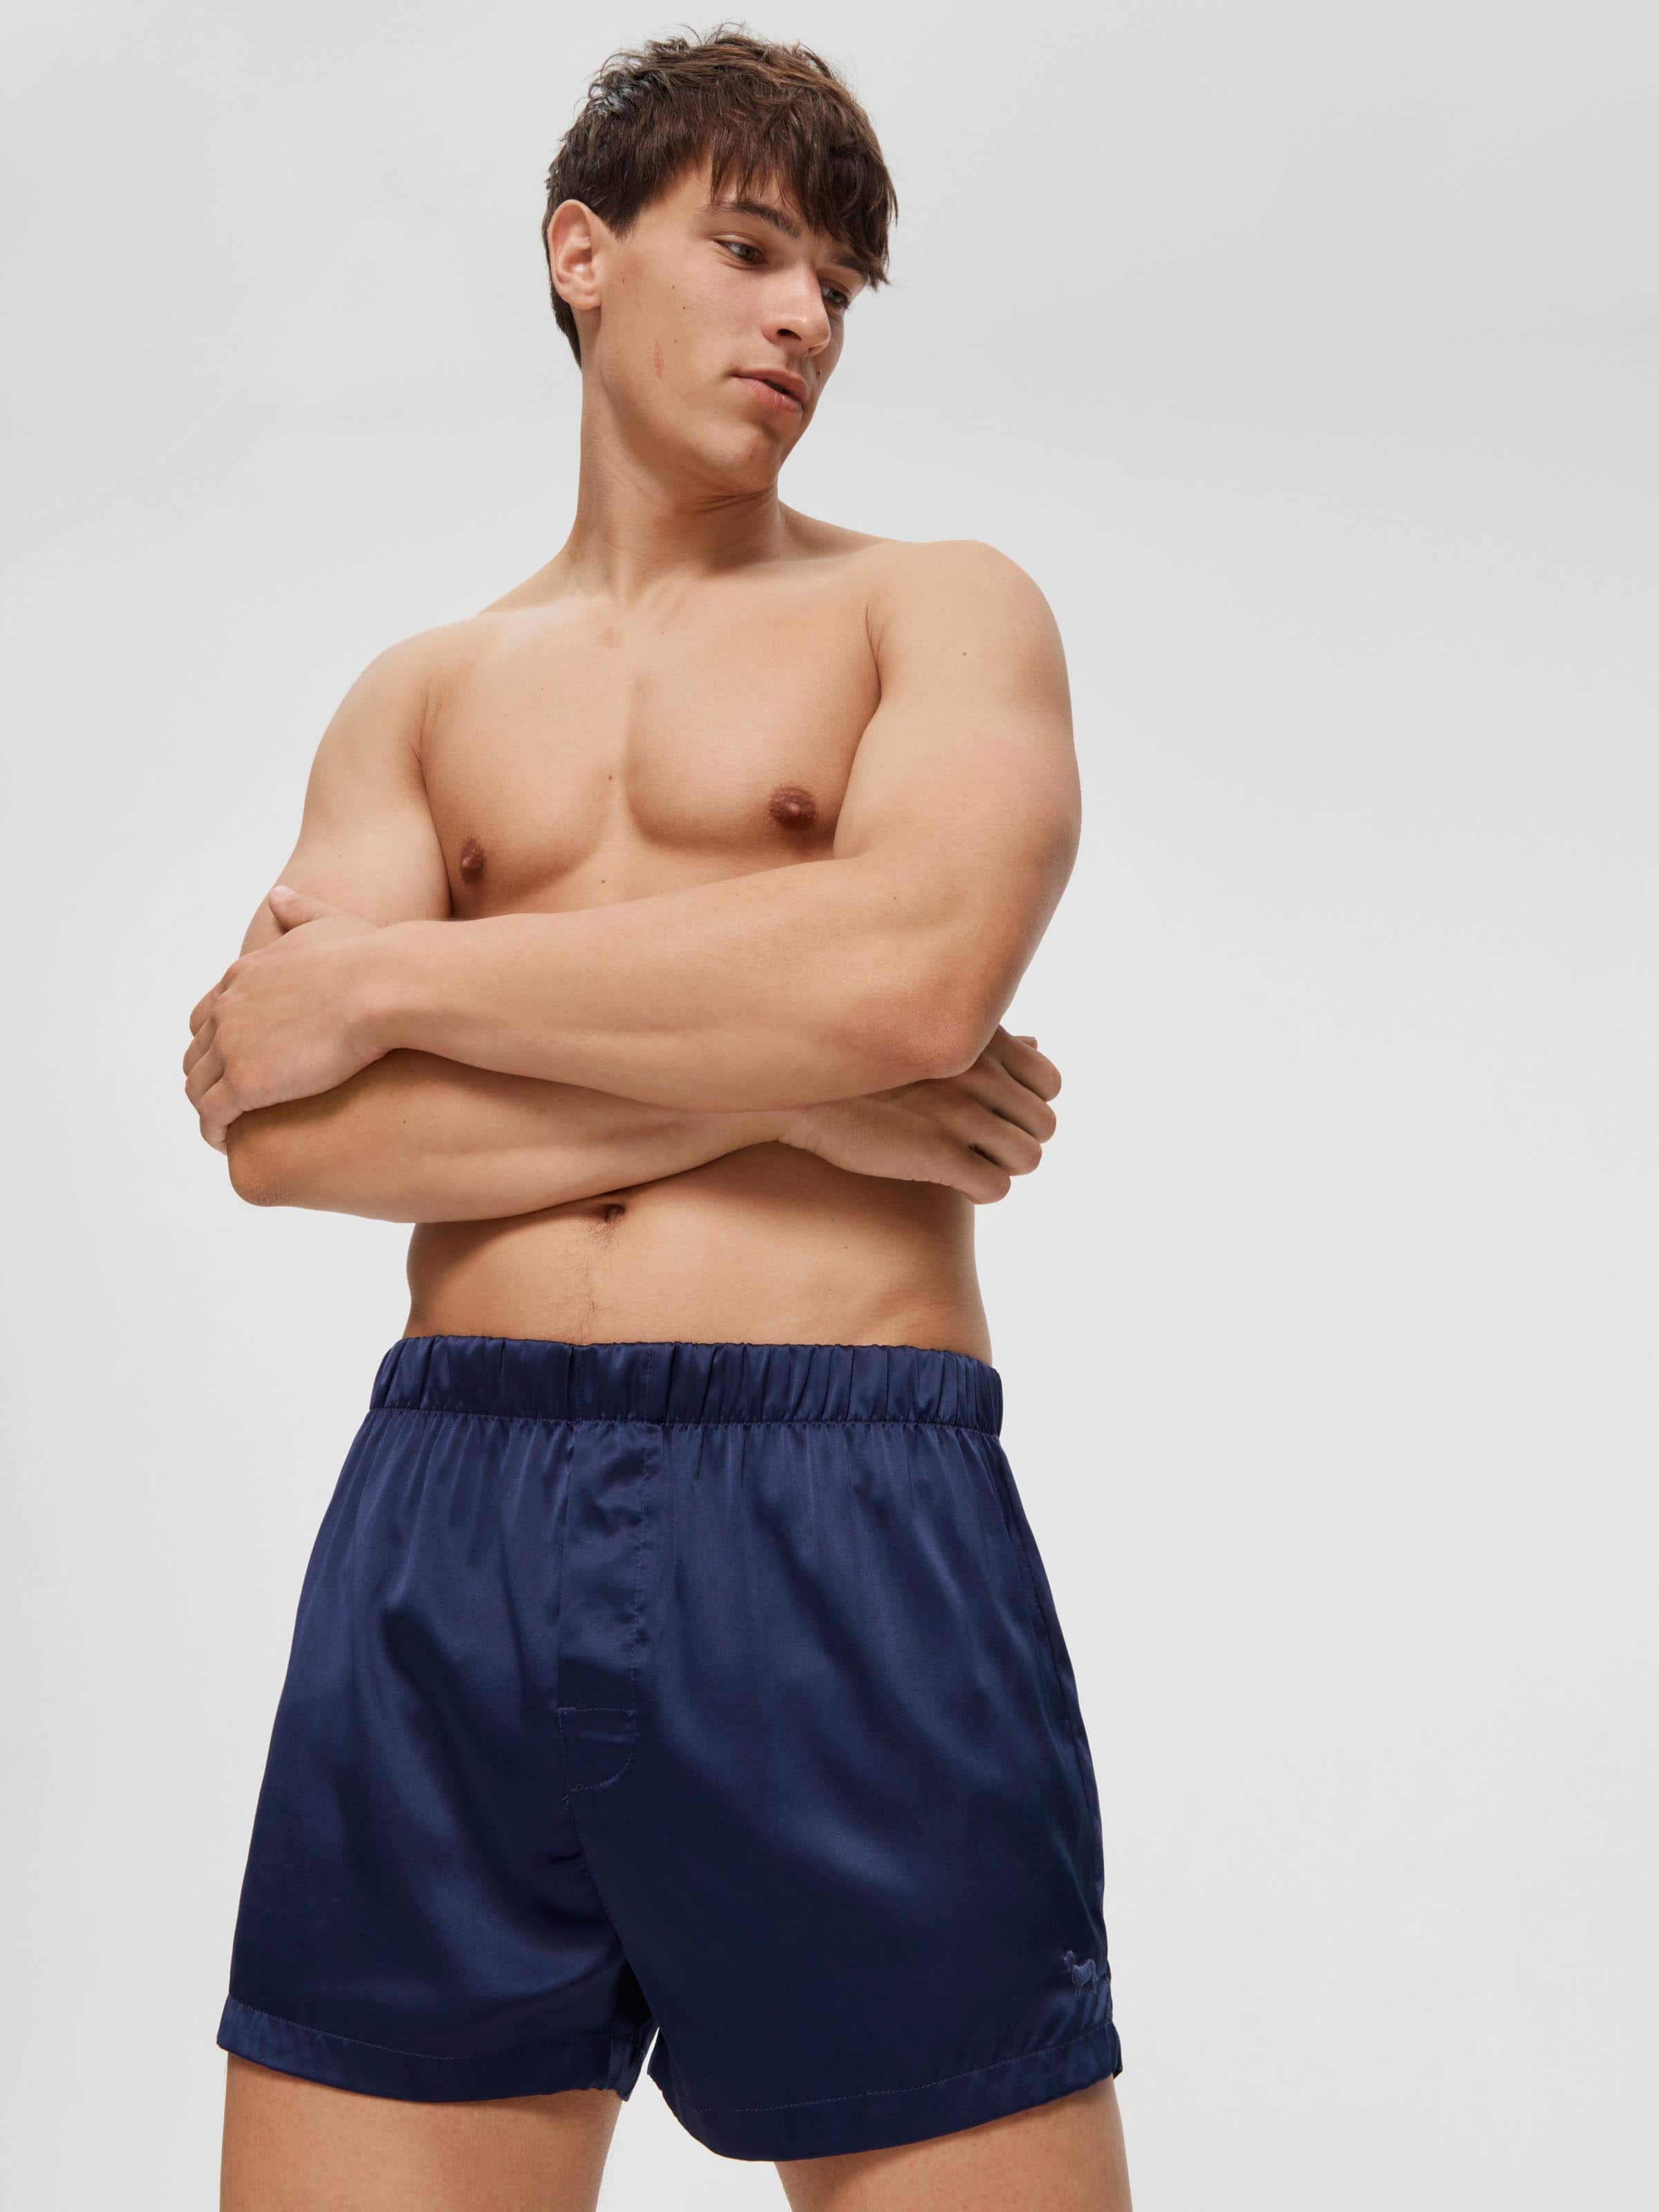 Men's Sleepwear Underwear Silk Satin Boxers Shorts Nightwear Pyjamas L XL  XXL 